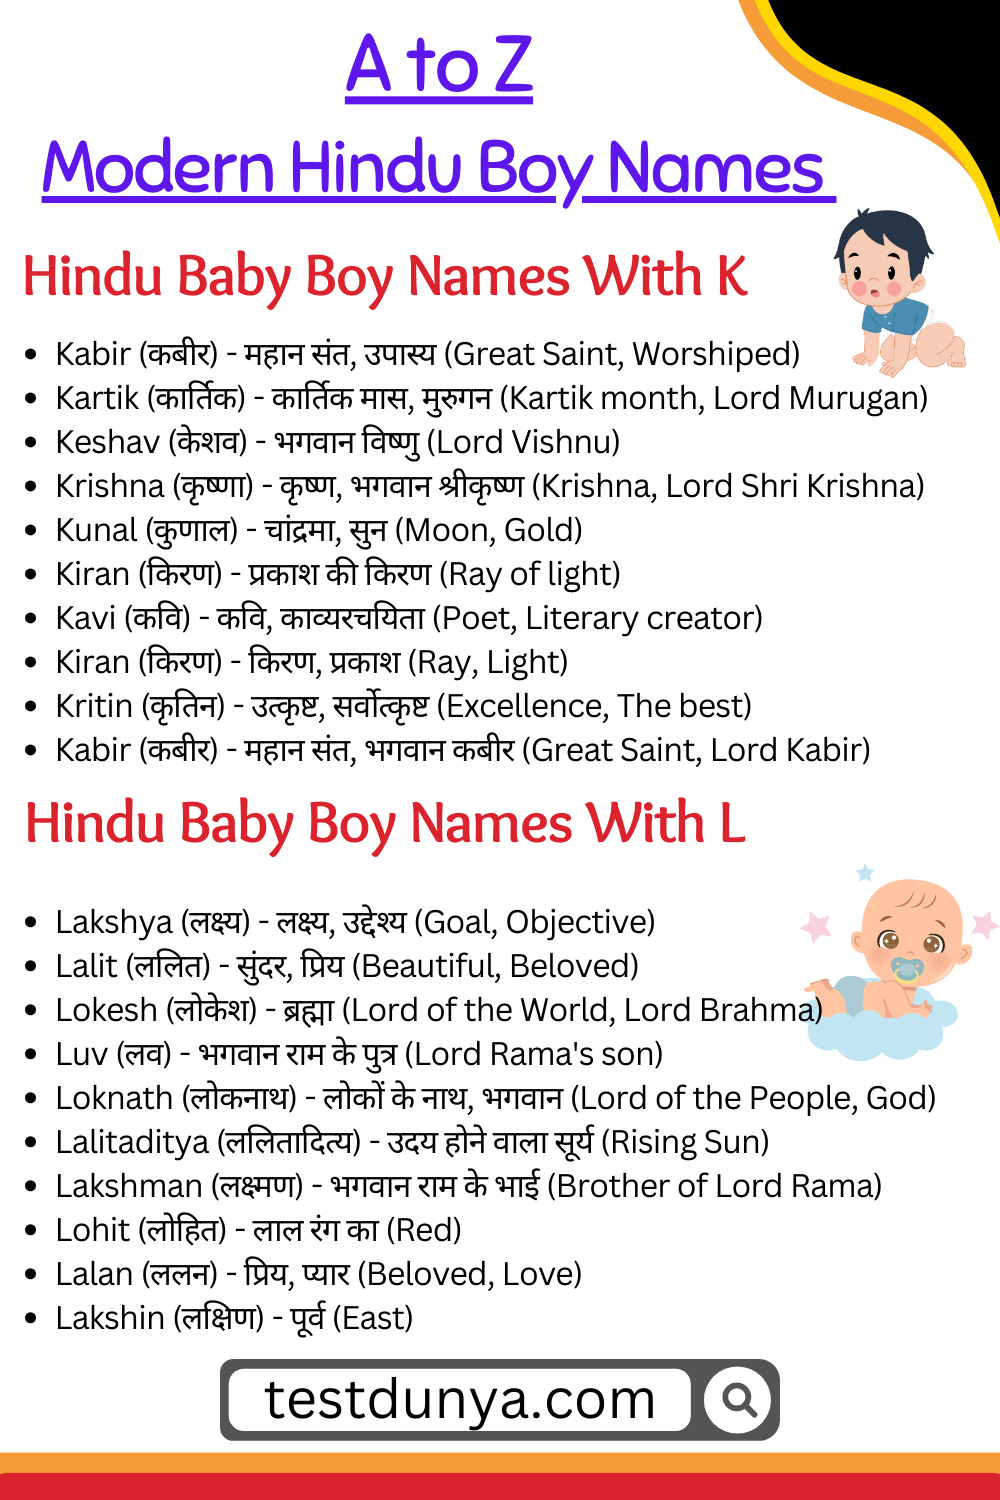 Modern Hindu baby boy names